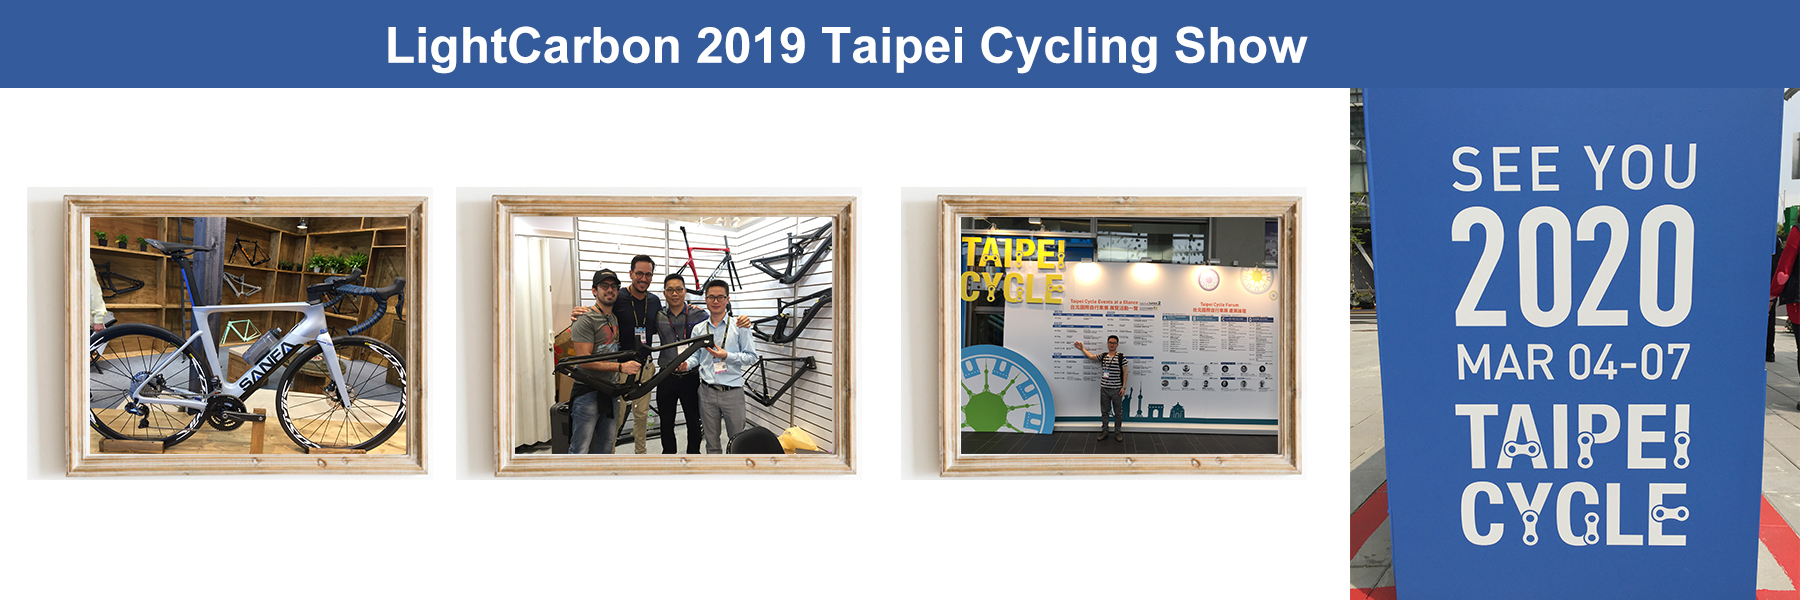 Pokaz kolarstwa lightcarbon Taipei 2019